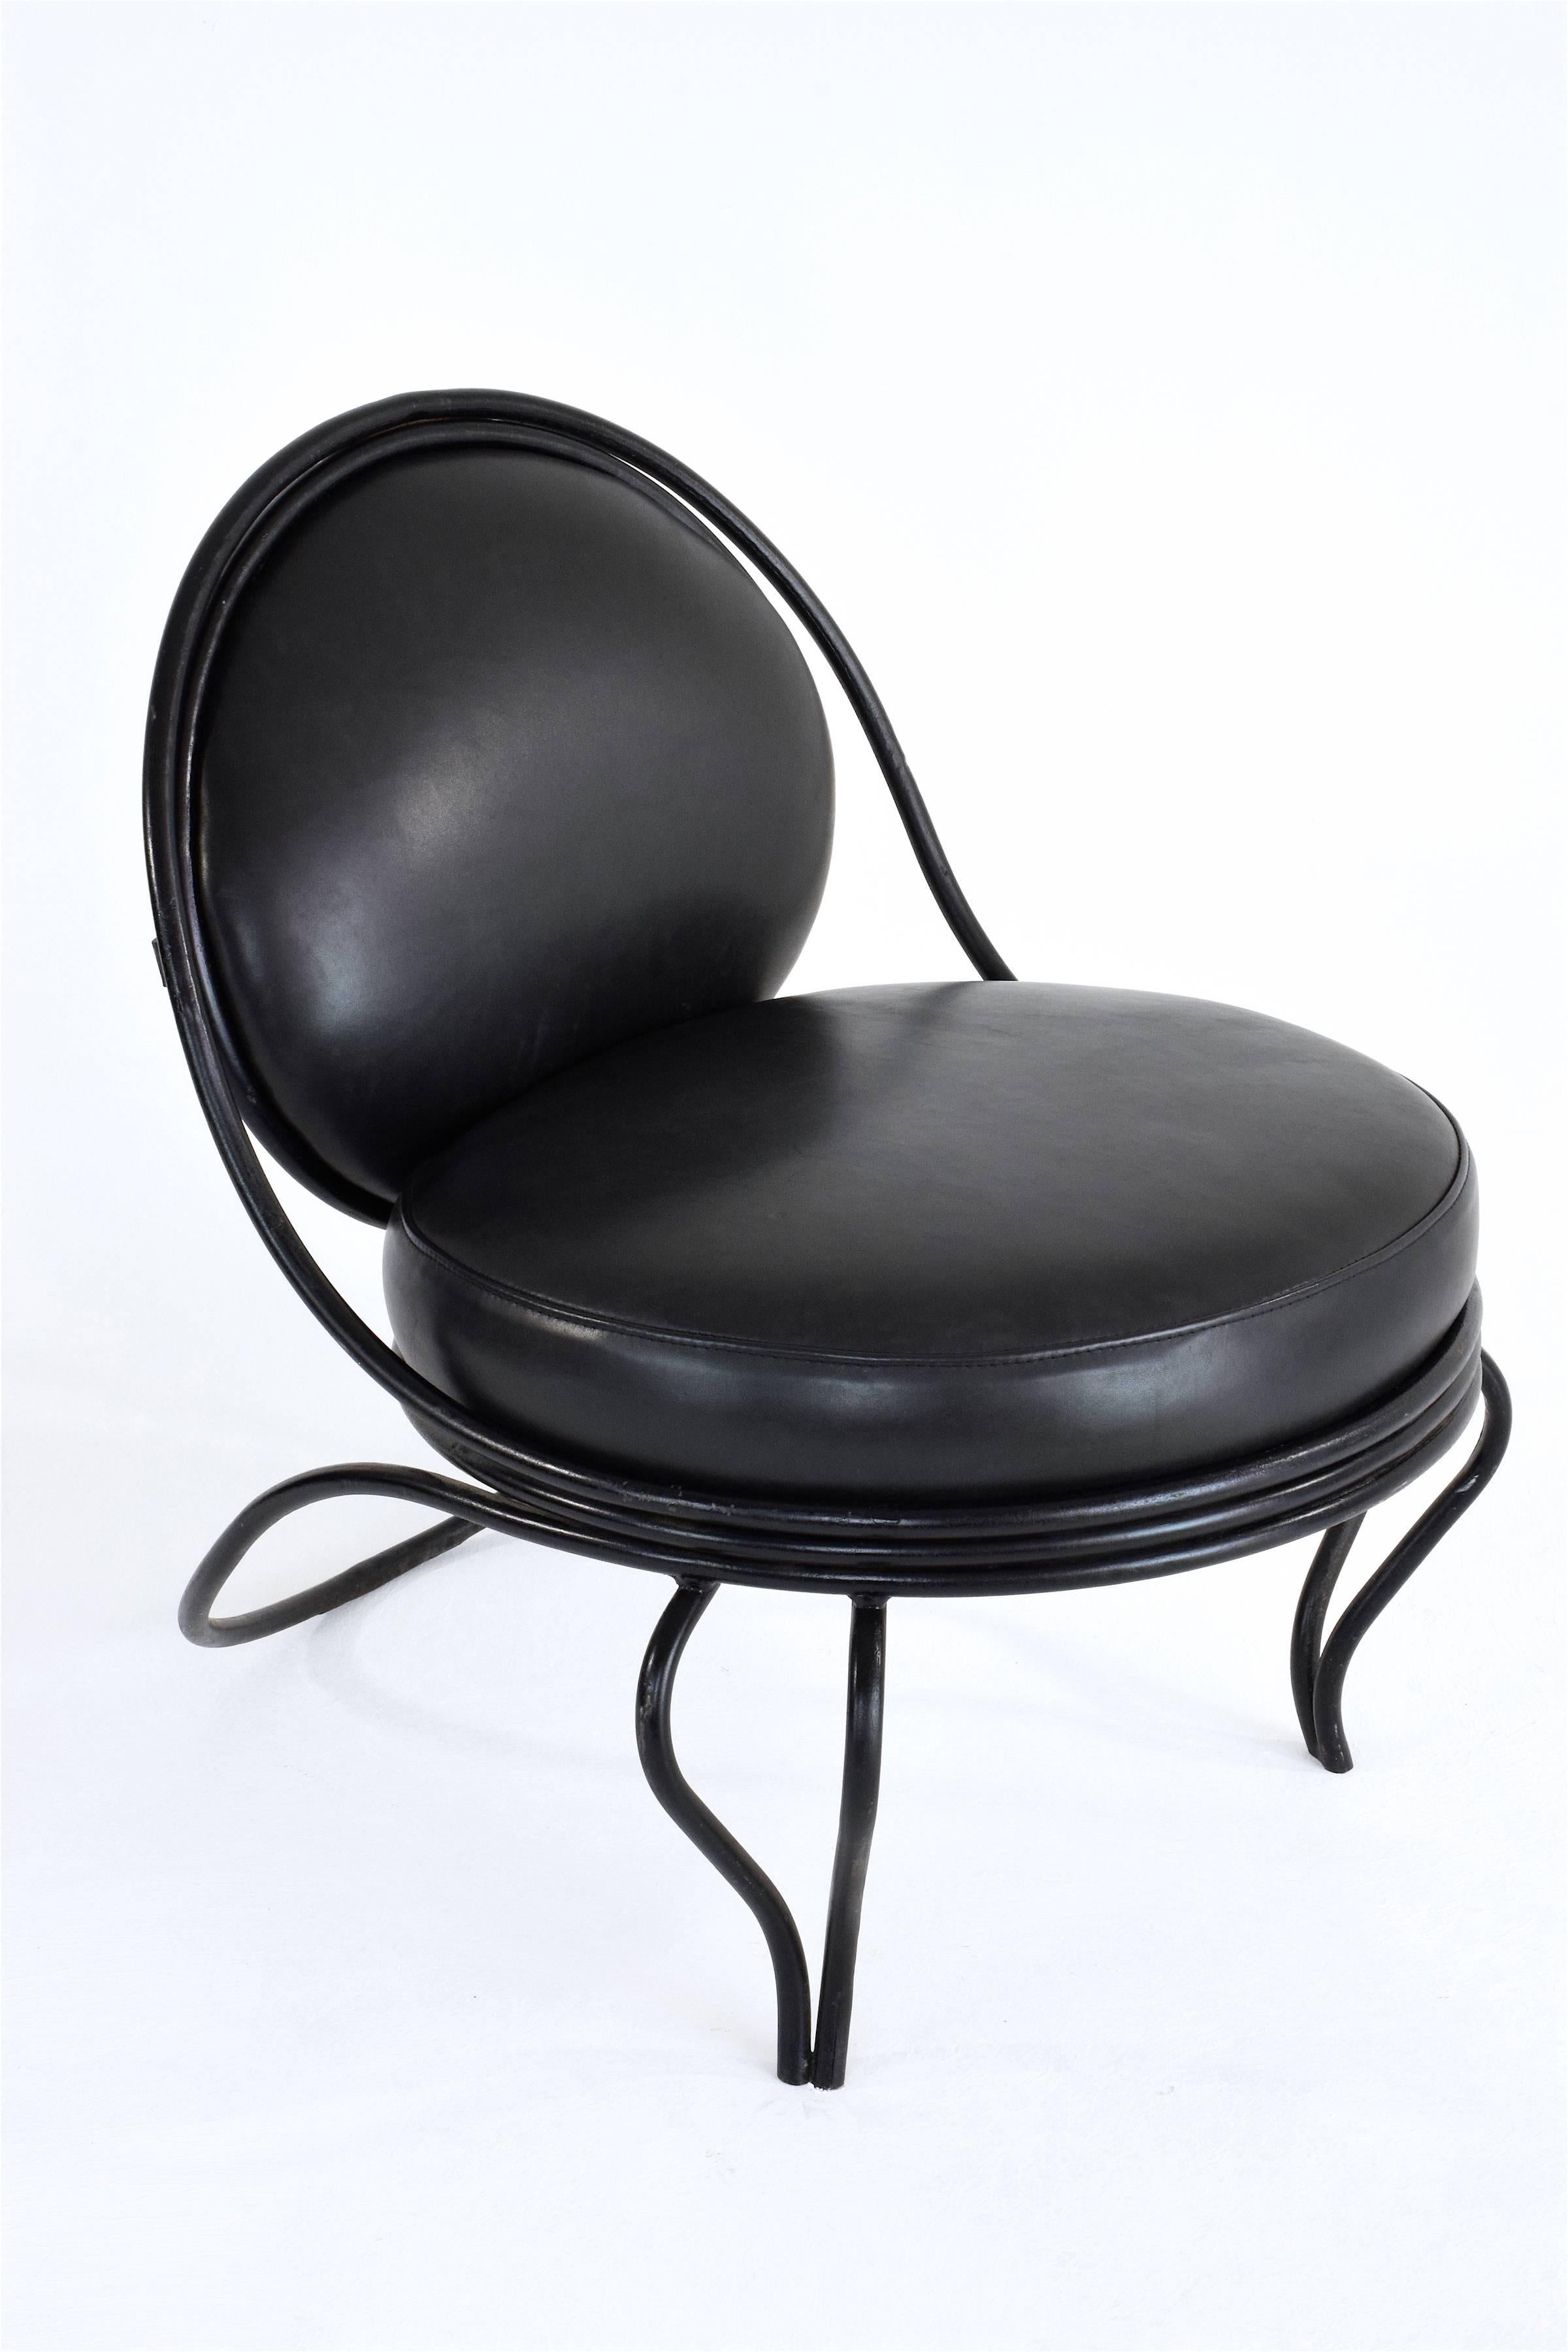 Mid-Century Modern Rare Midcentury Copacabana Chair by Mathieu Matégot, 1955 For Sale